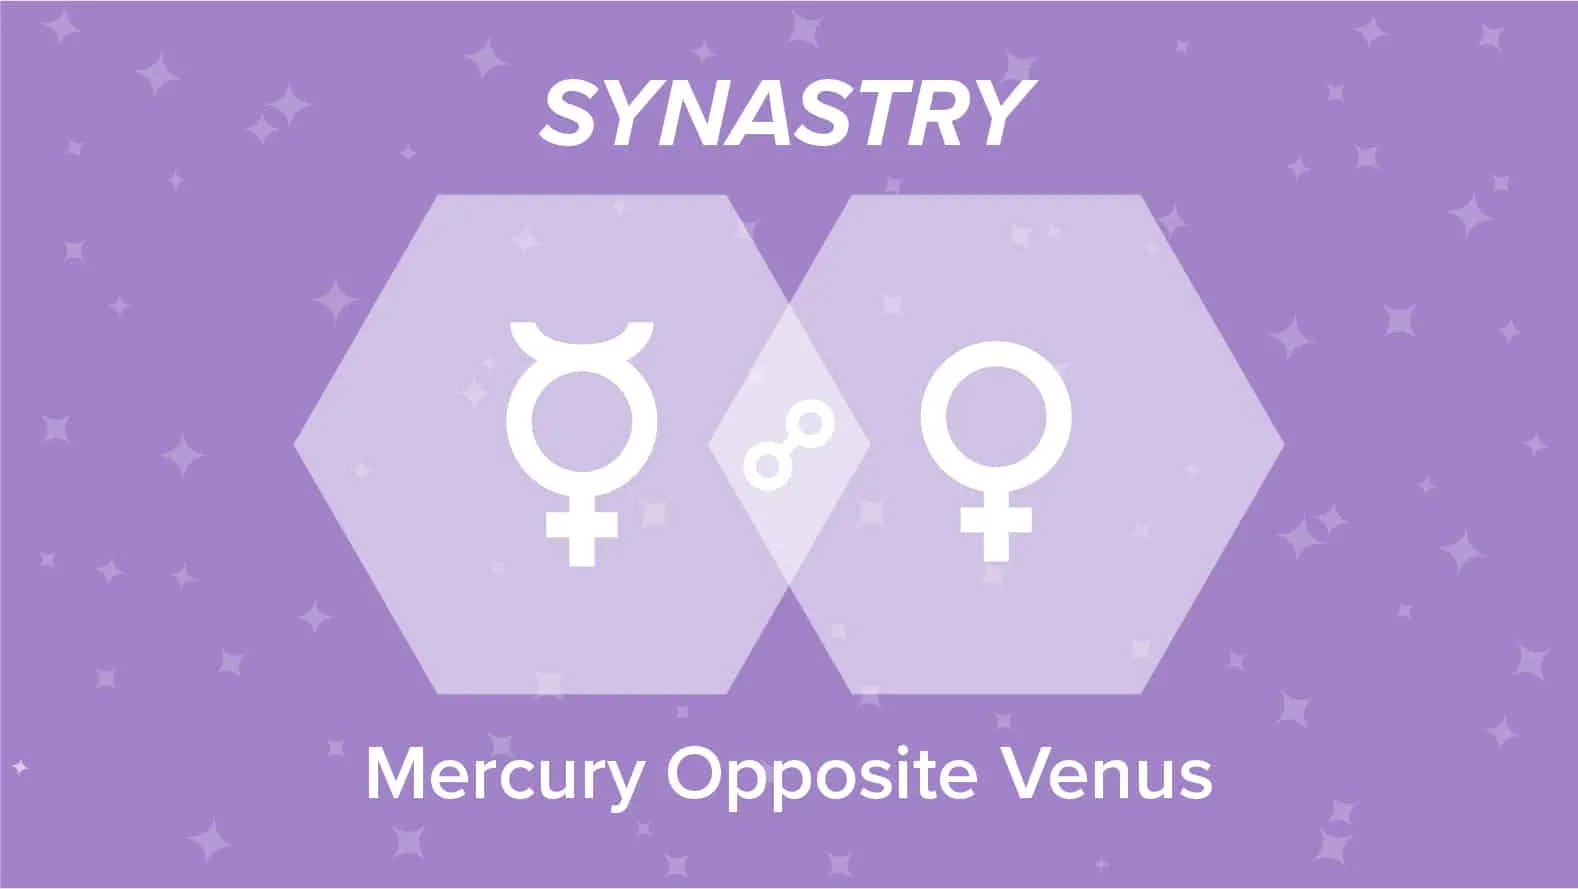 Mercury Opposite Venus Synastry